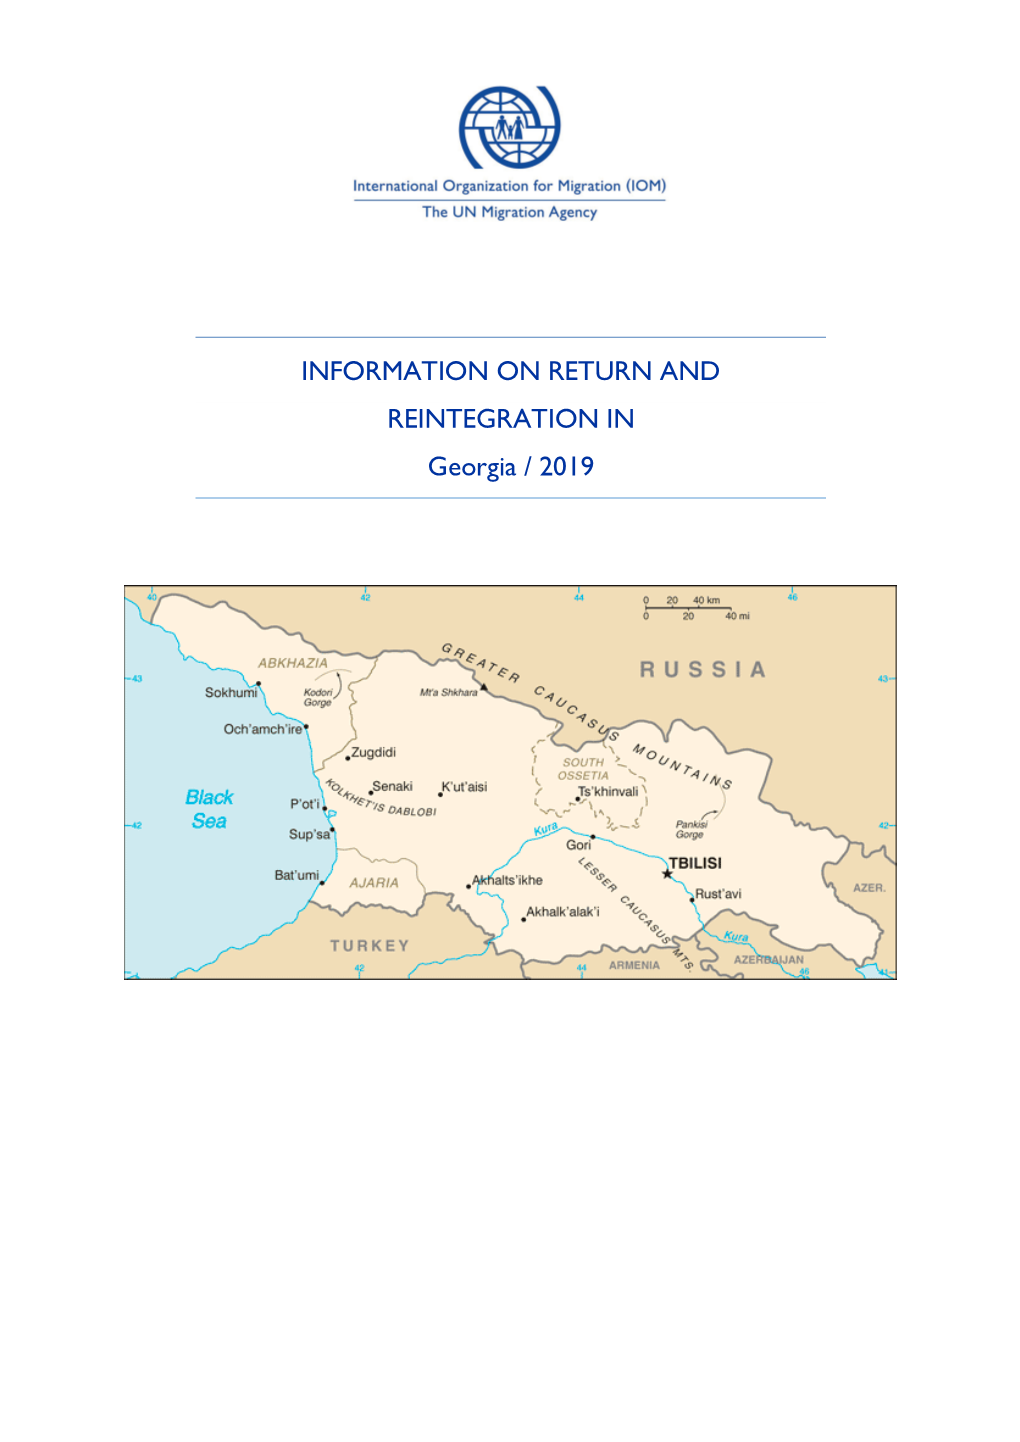 INFORMATION on RETURN and REINTEGRATION in Georgia / 2019